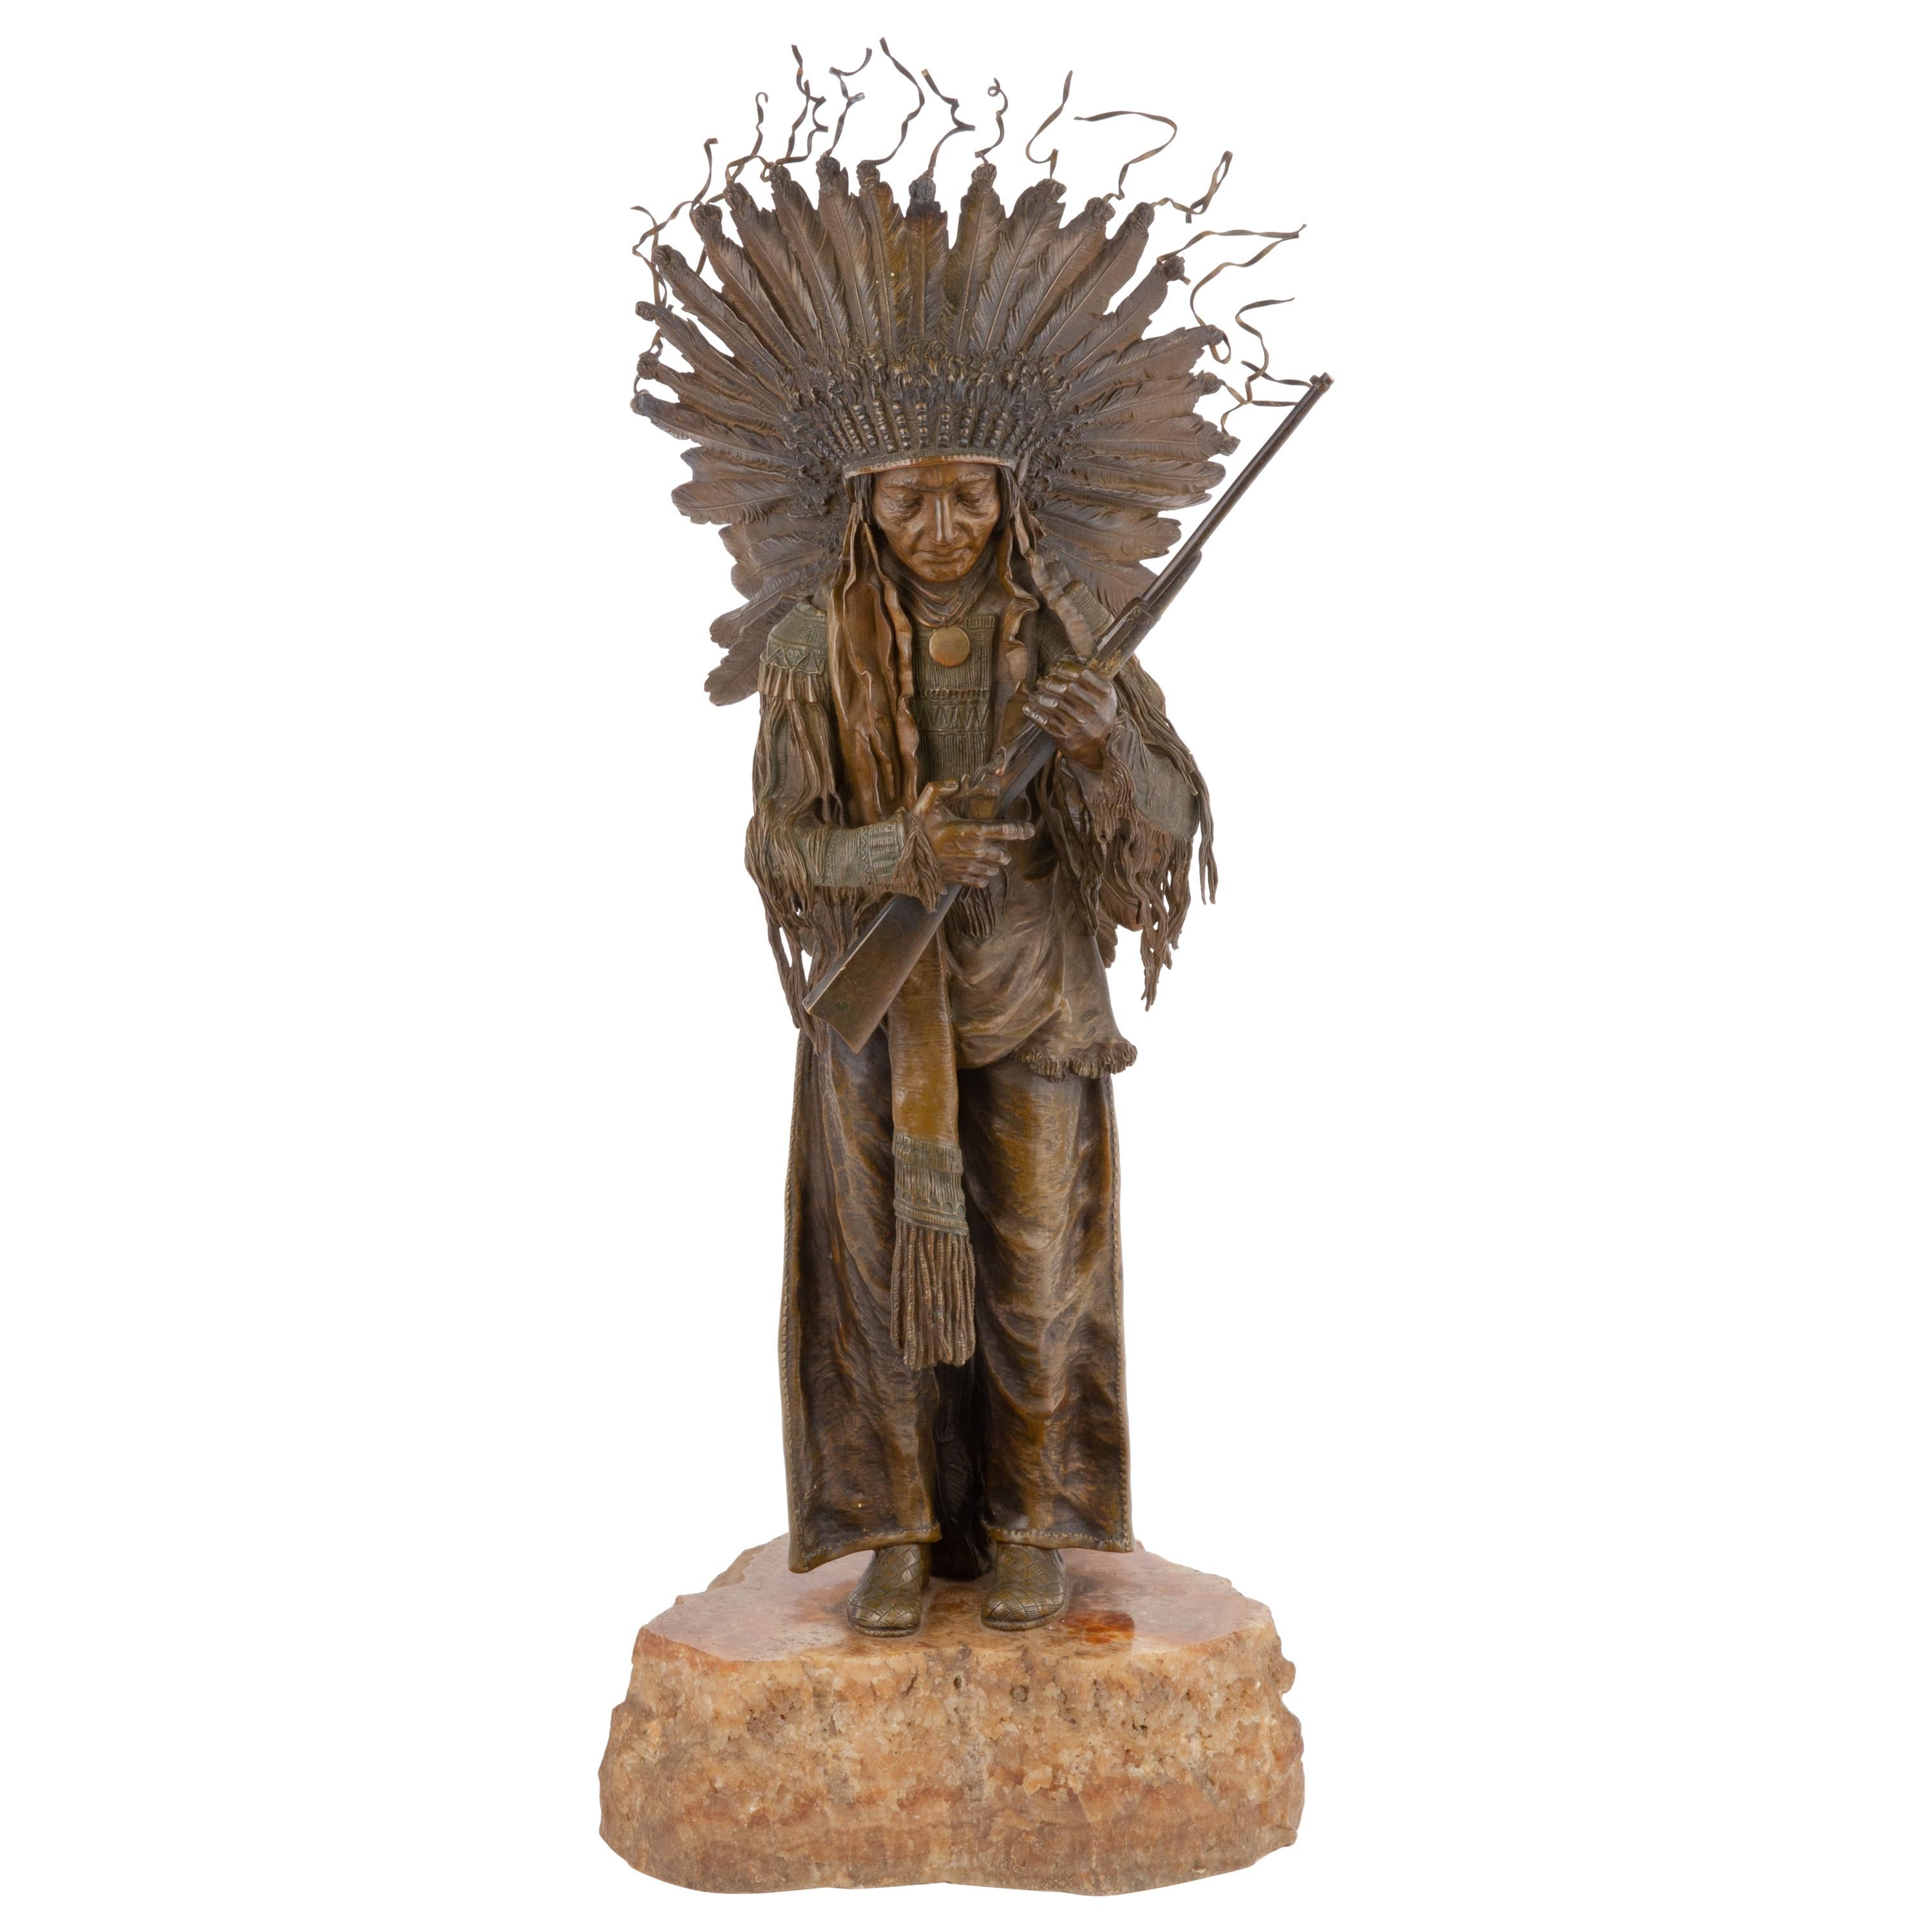 Austrian Art Nouveau Bronze Sculpture "Warrior Chief with Rifle" by, Carl Kauba